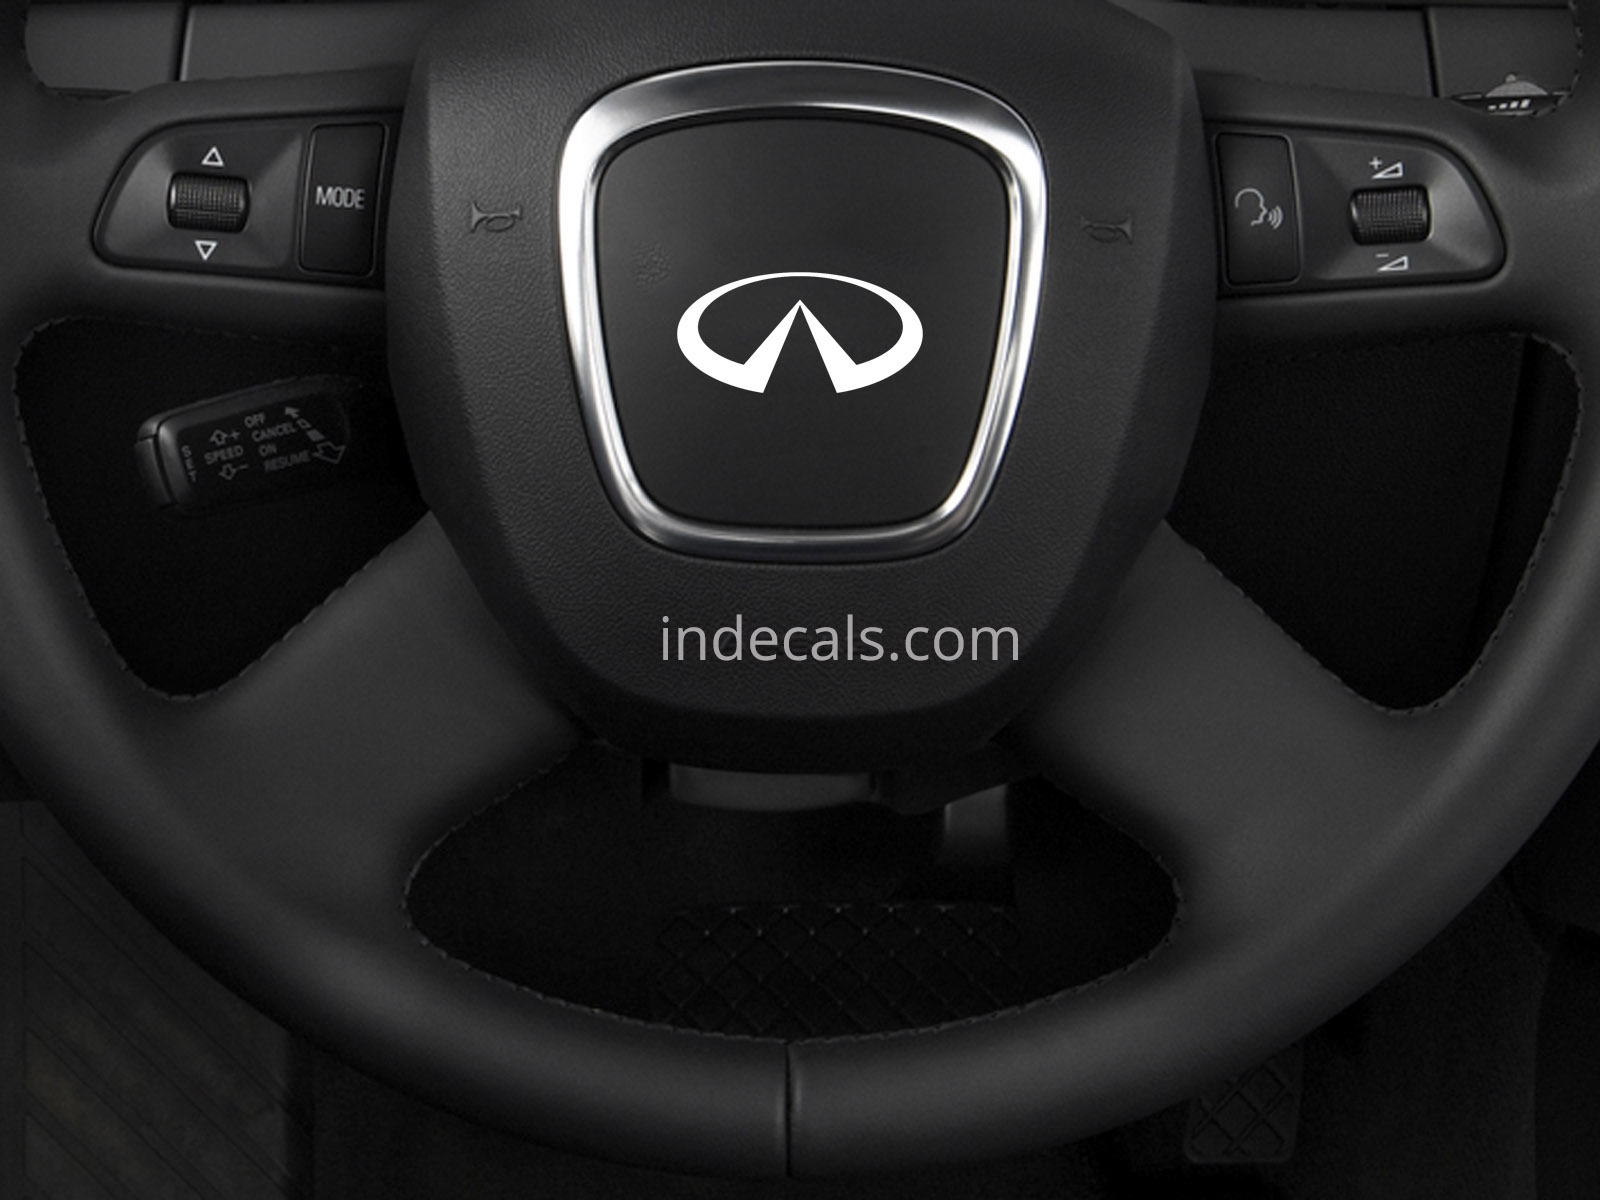 3 x Infiniti Stickers for Steering Wheel - White